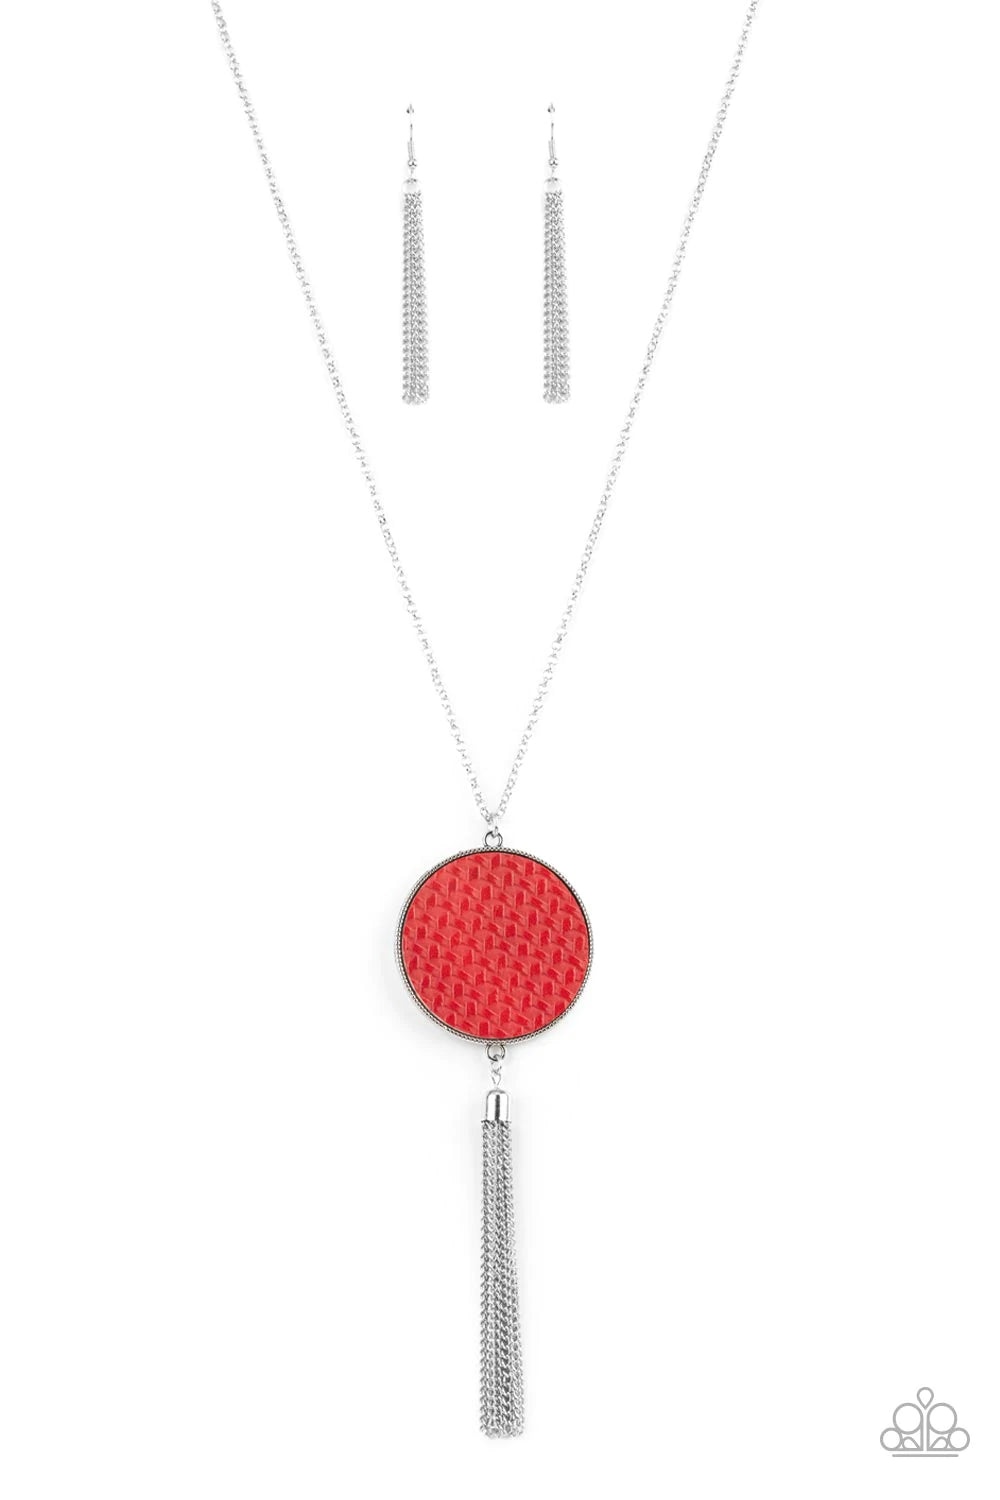 Island Queen - Red Necklace - Paparazzi Accessories – Bedazzle Me Pretty  Mobile Fashion Boutique